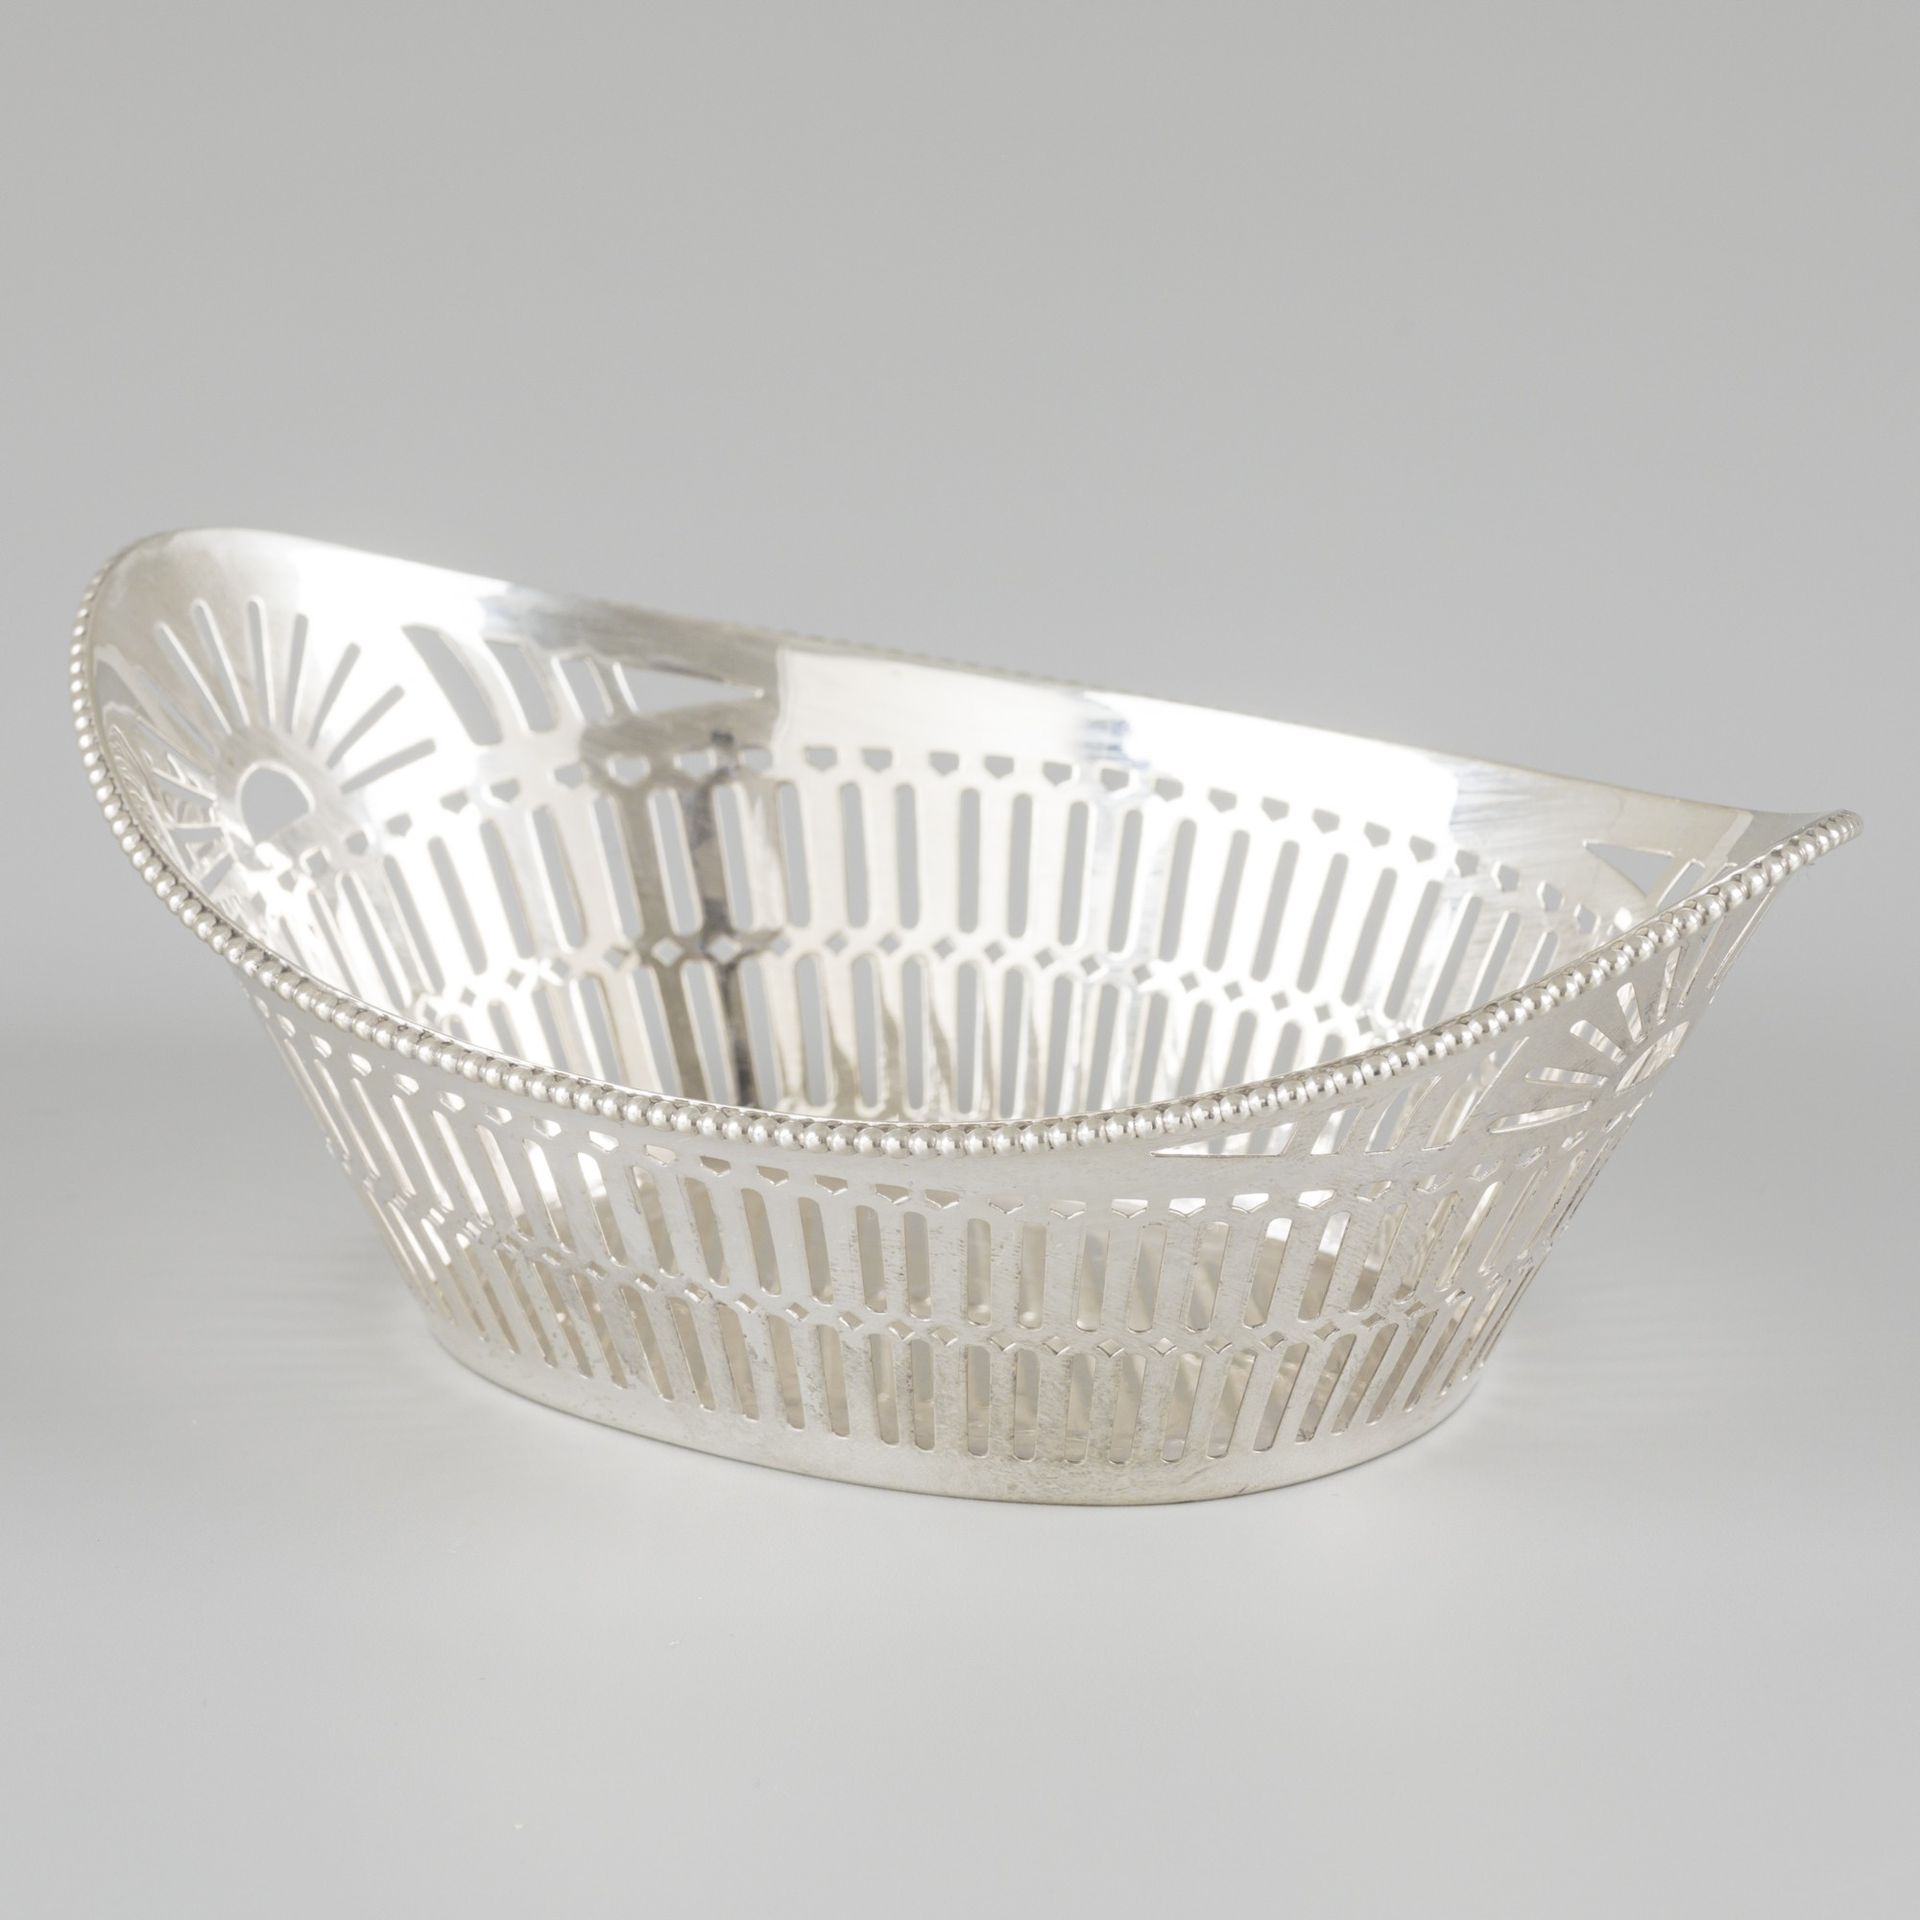 Silver bonbon / sweetmeat basket. 船形模型，有焊接的珍珠边缘和镂空的侧面。荷兰，哈勒姆，A. Presburg & Zoon，&hellip;